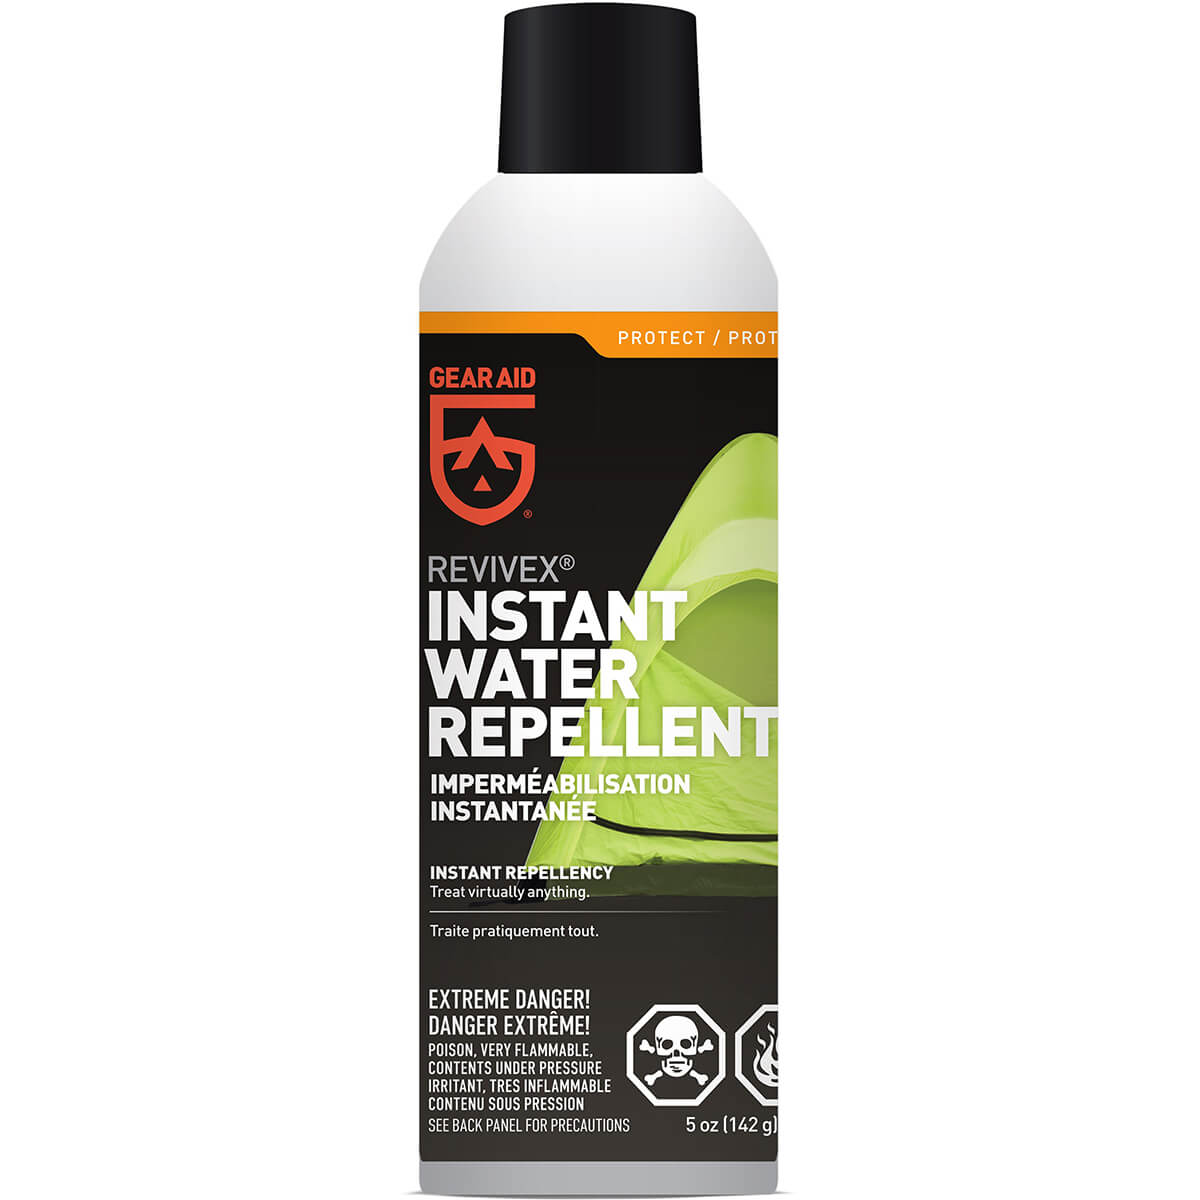 Gear Aid Revivex® Instant Water Repellent - 5 oz